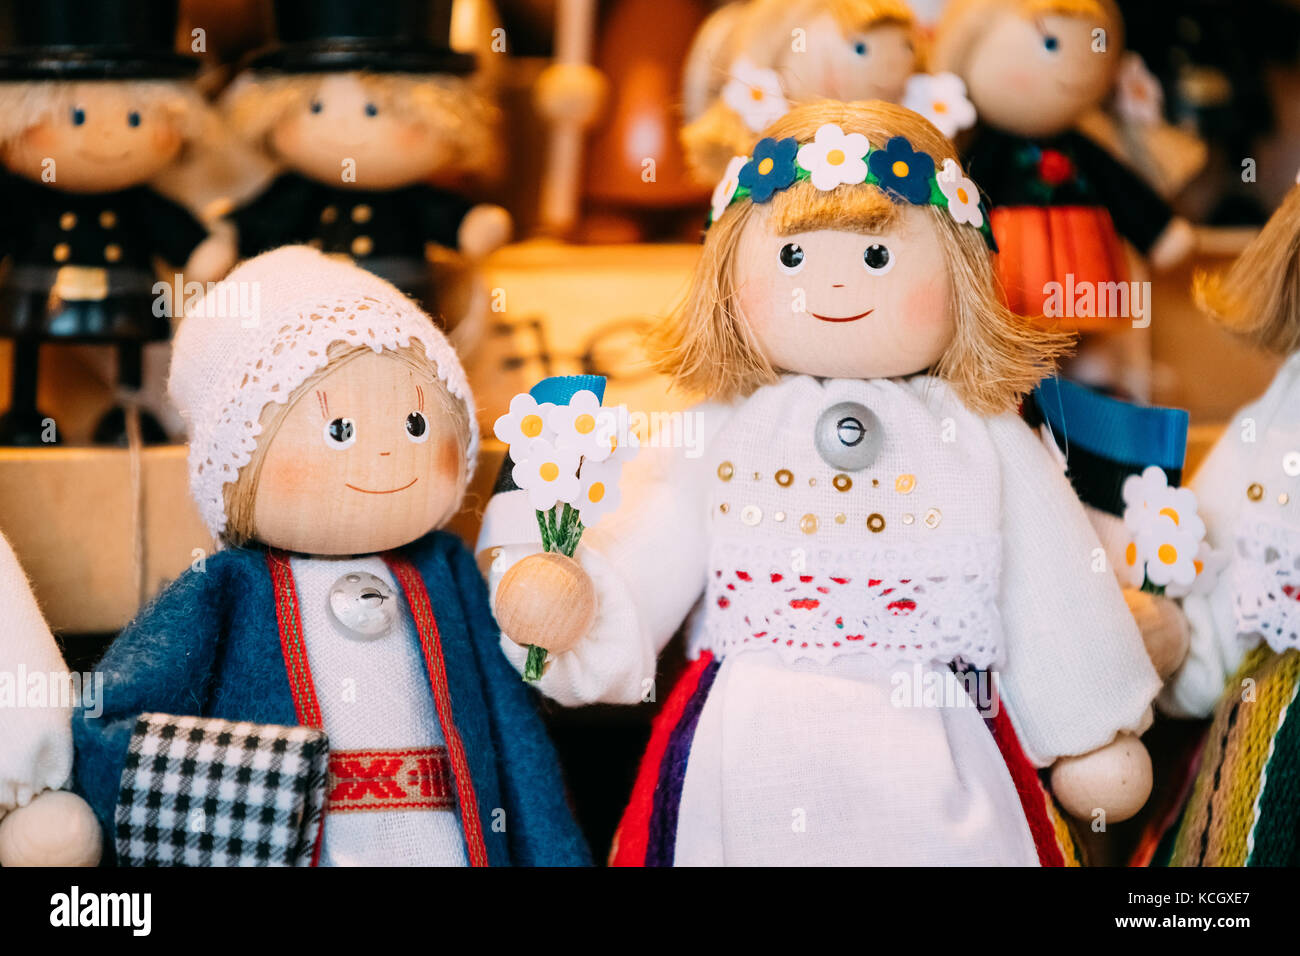 Traditional Souvenirs Ethnic Folk National Wooden Dolls Toys At European Estonian Market. Popular Souvenir From Tallinn, Estonia Stock Photo